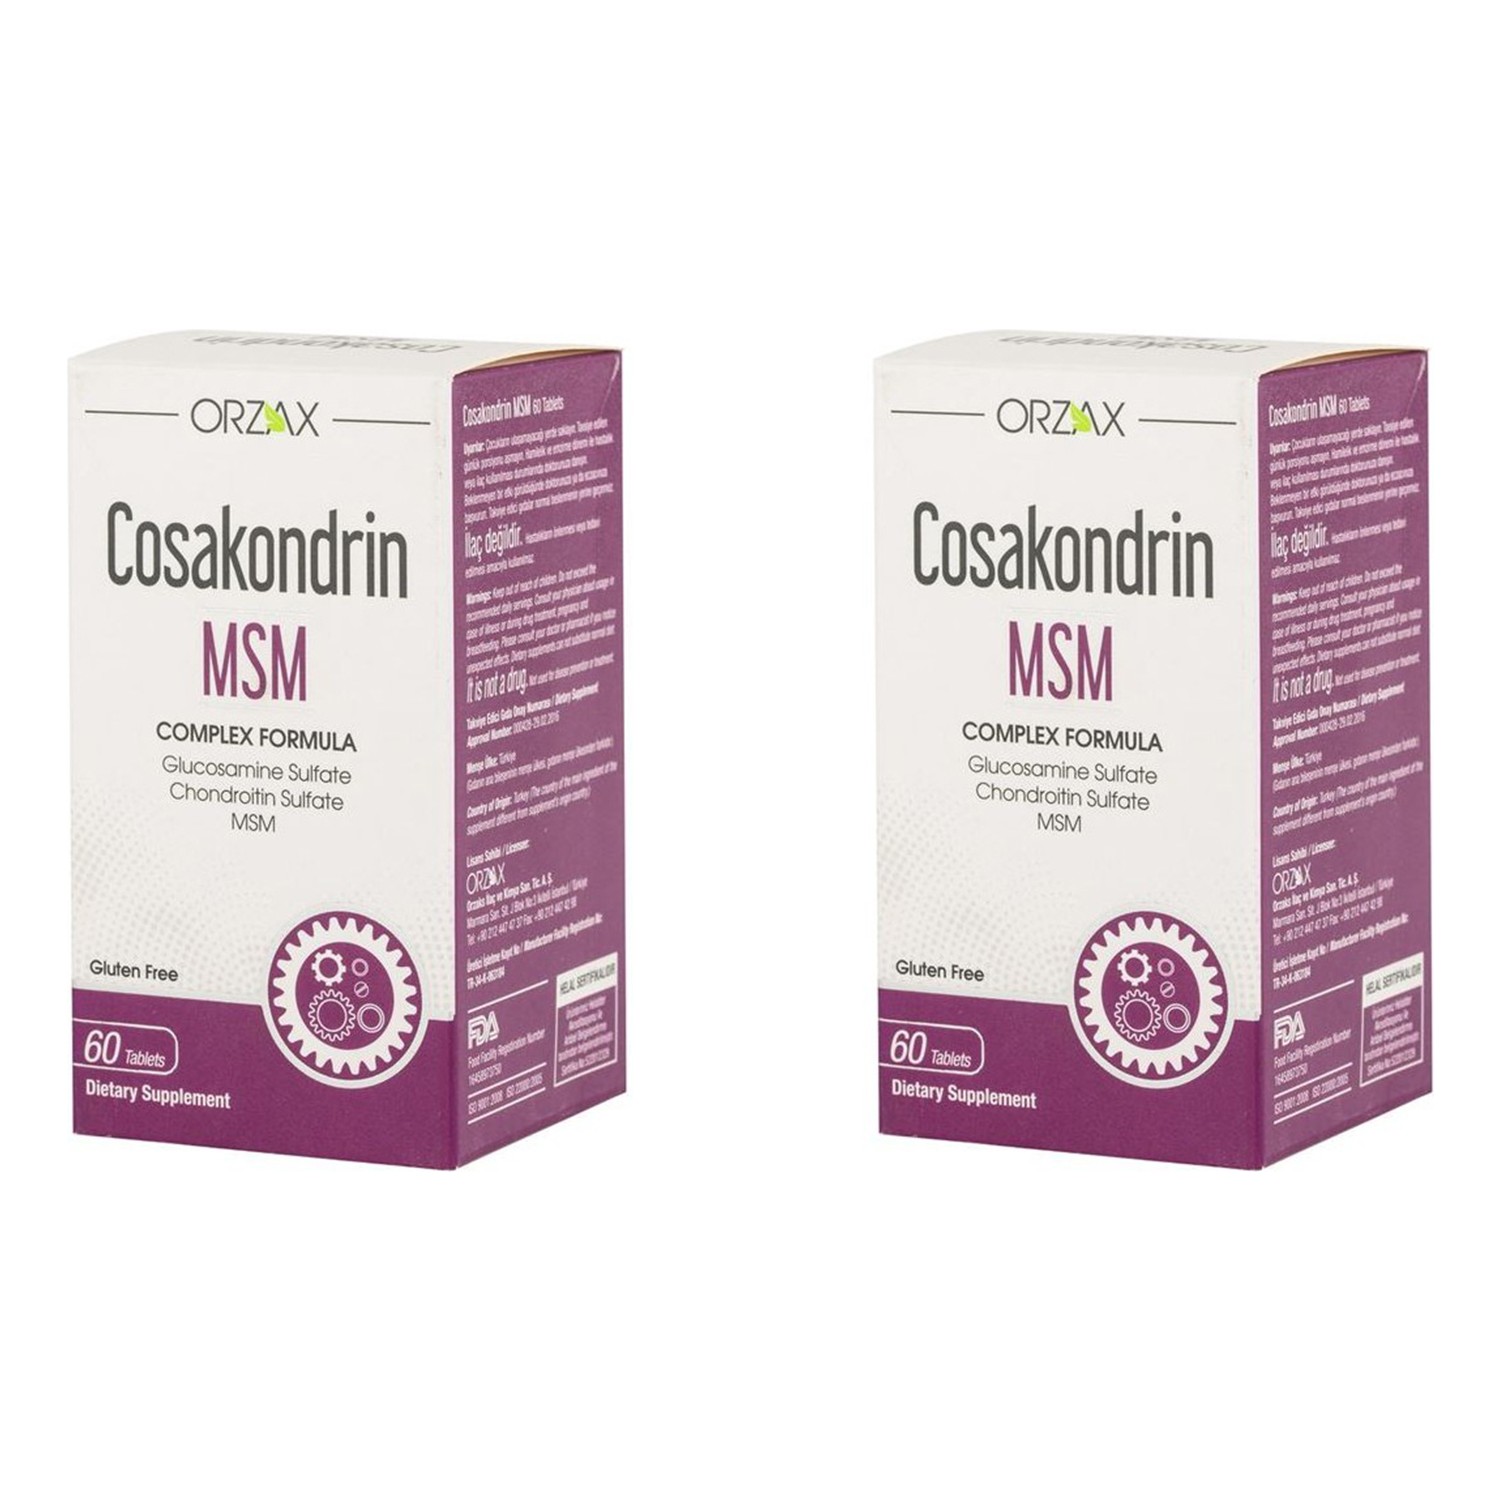 Пищевая добавка Orzax Cosakondrin Msm, 2 упаковки по 60 таблеток